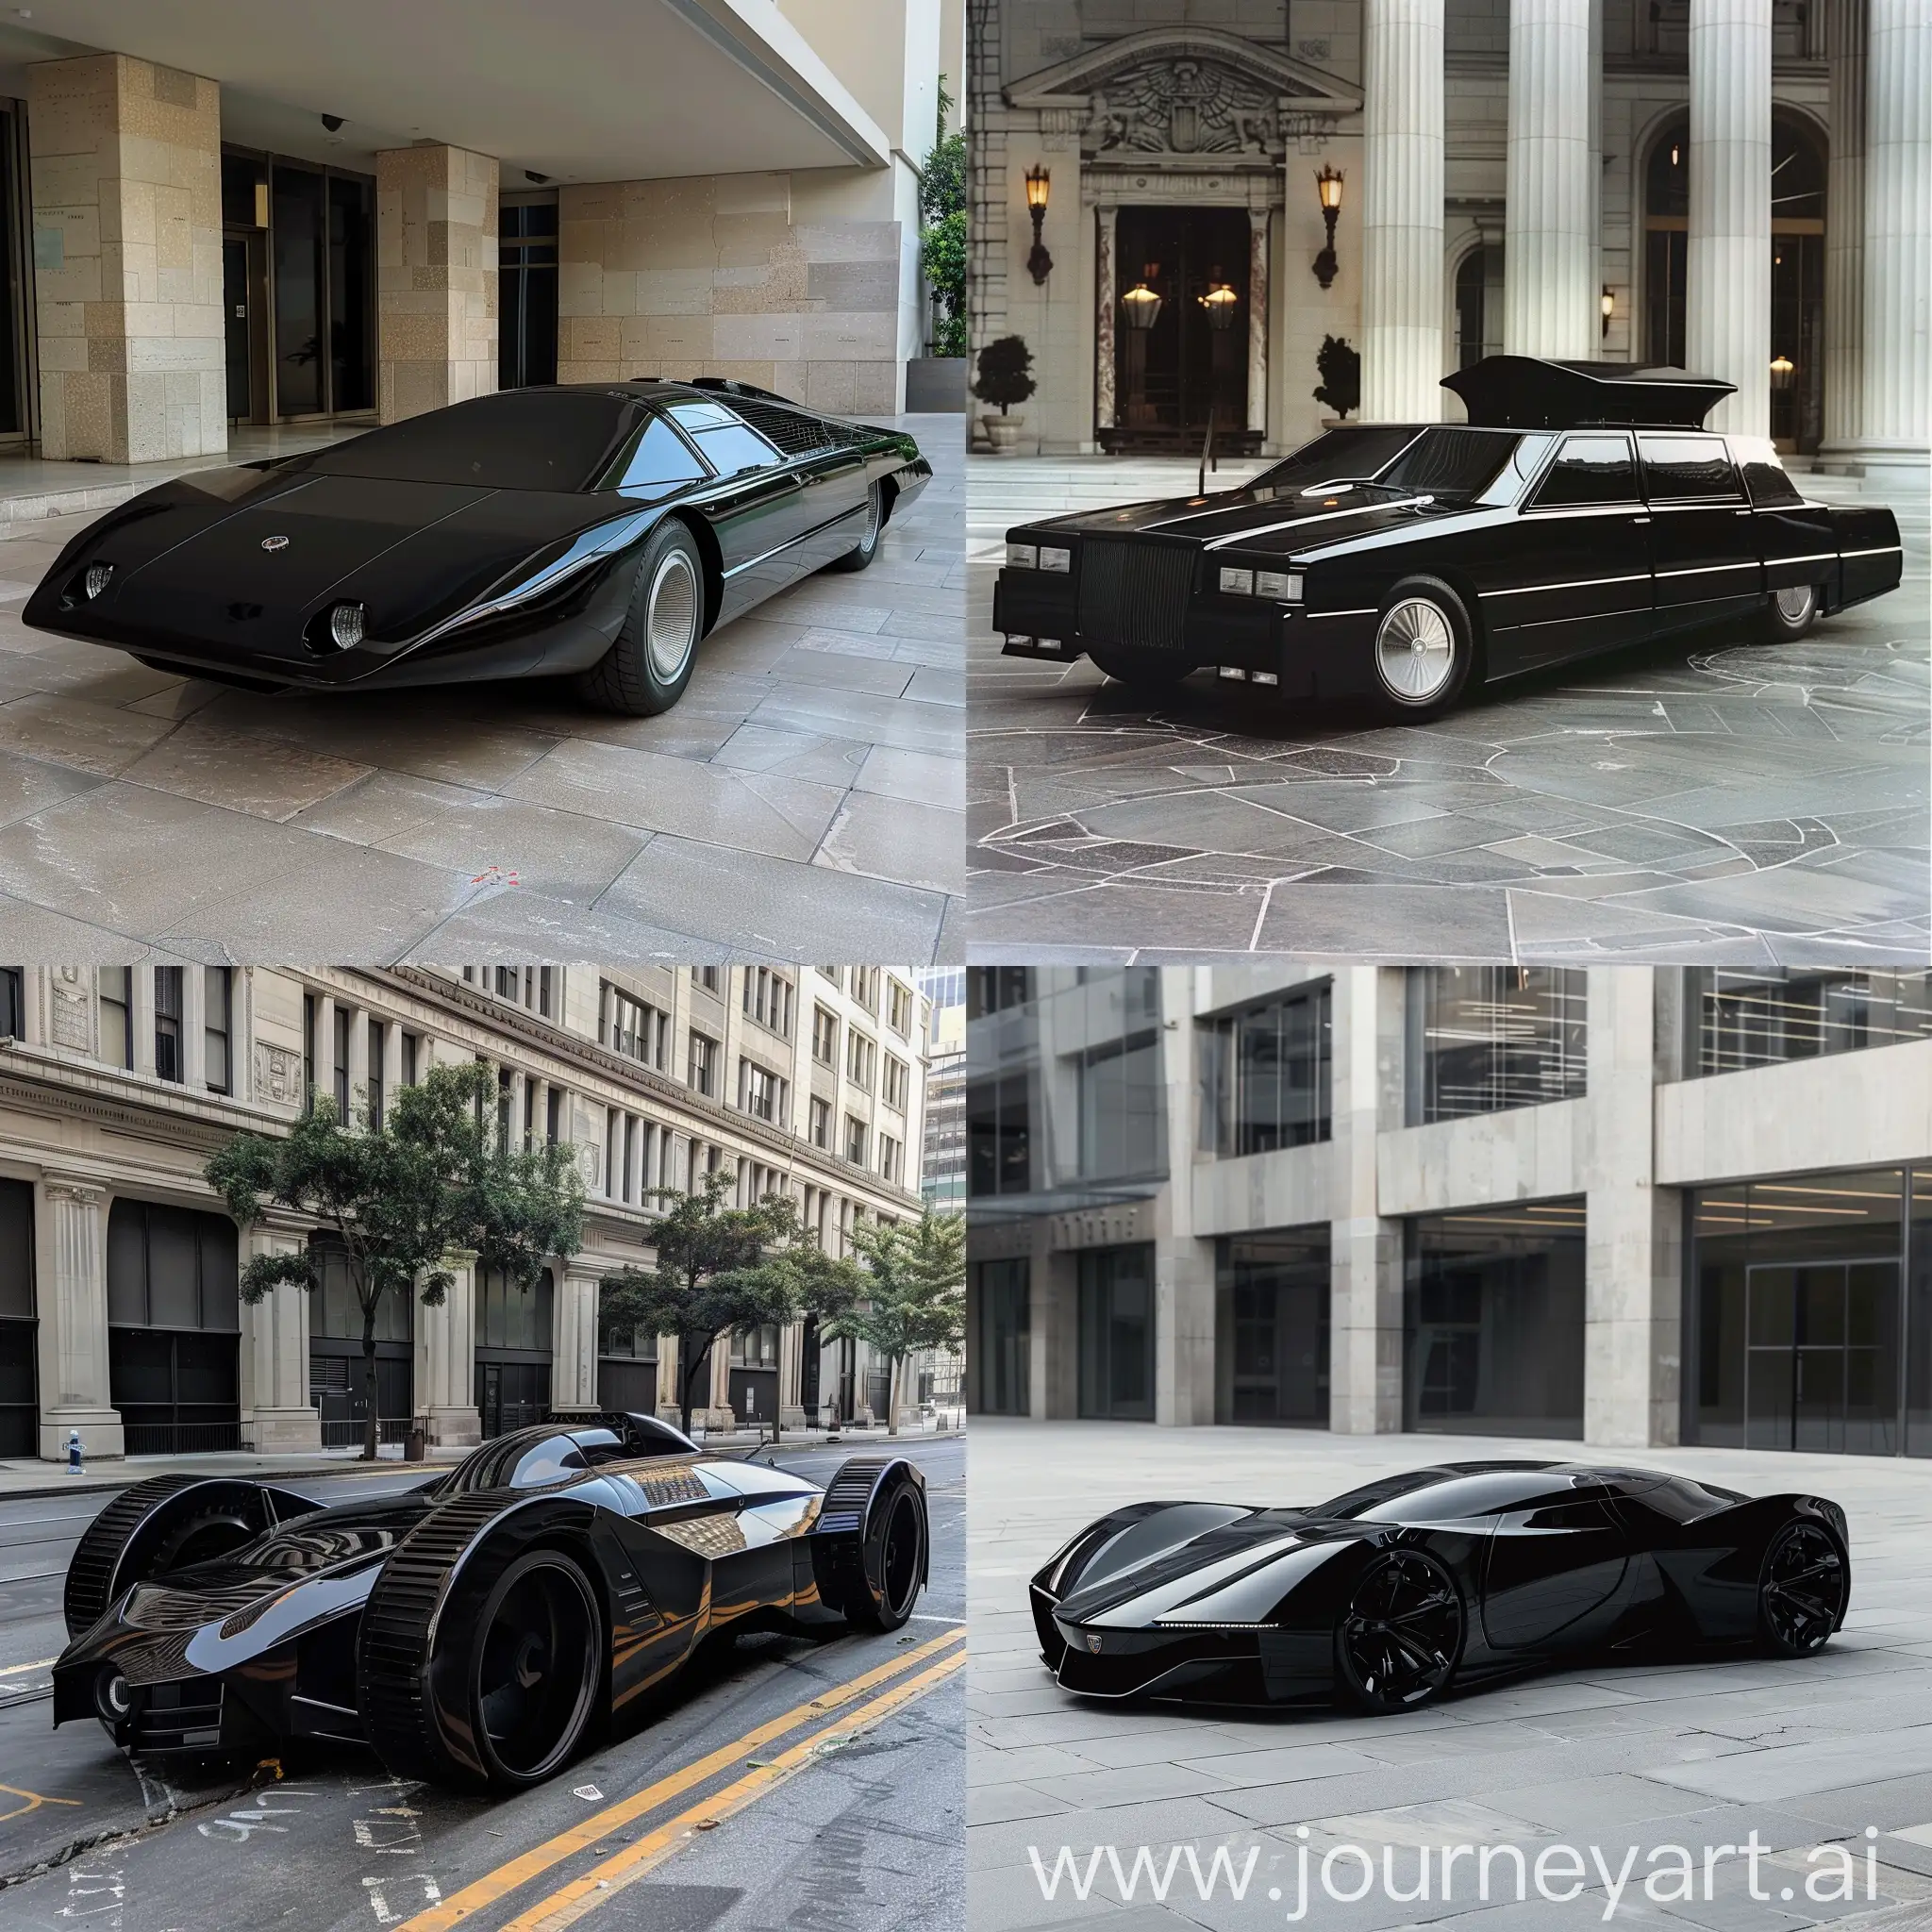 Futuristic-Black-Government-Car-Concept-Version-6-AR-11-No-72437